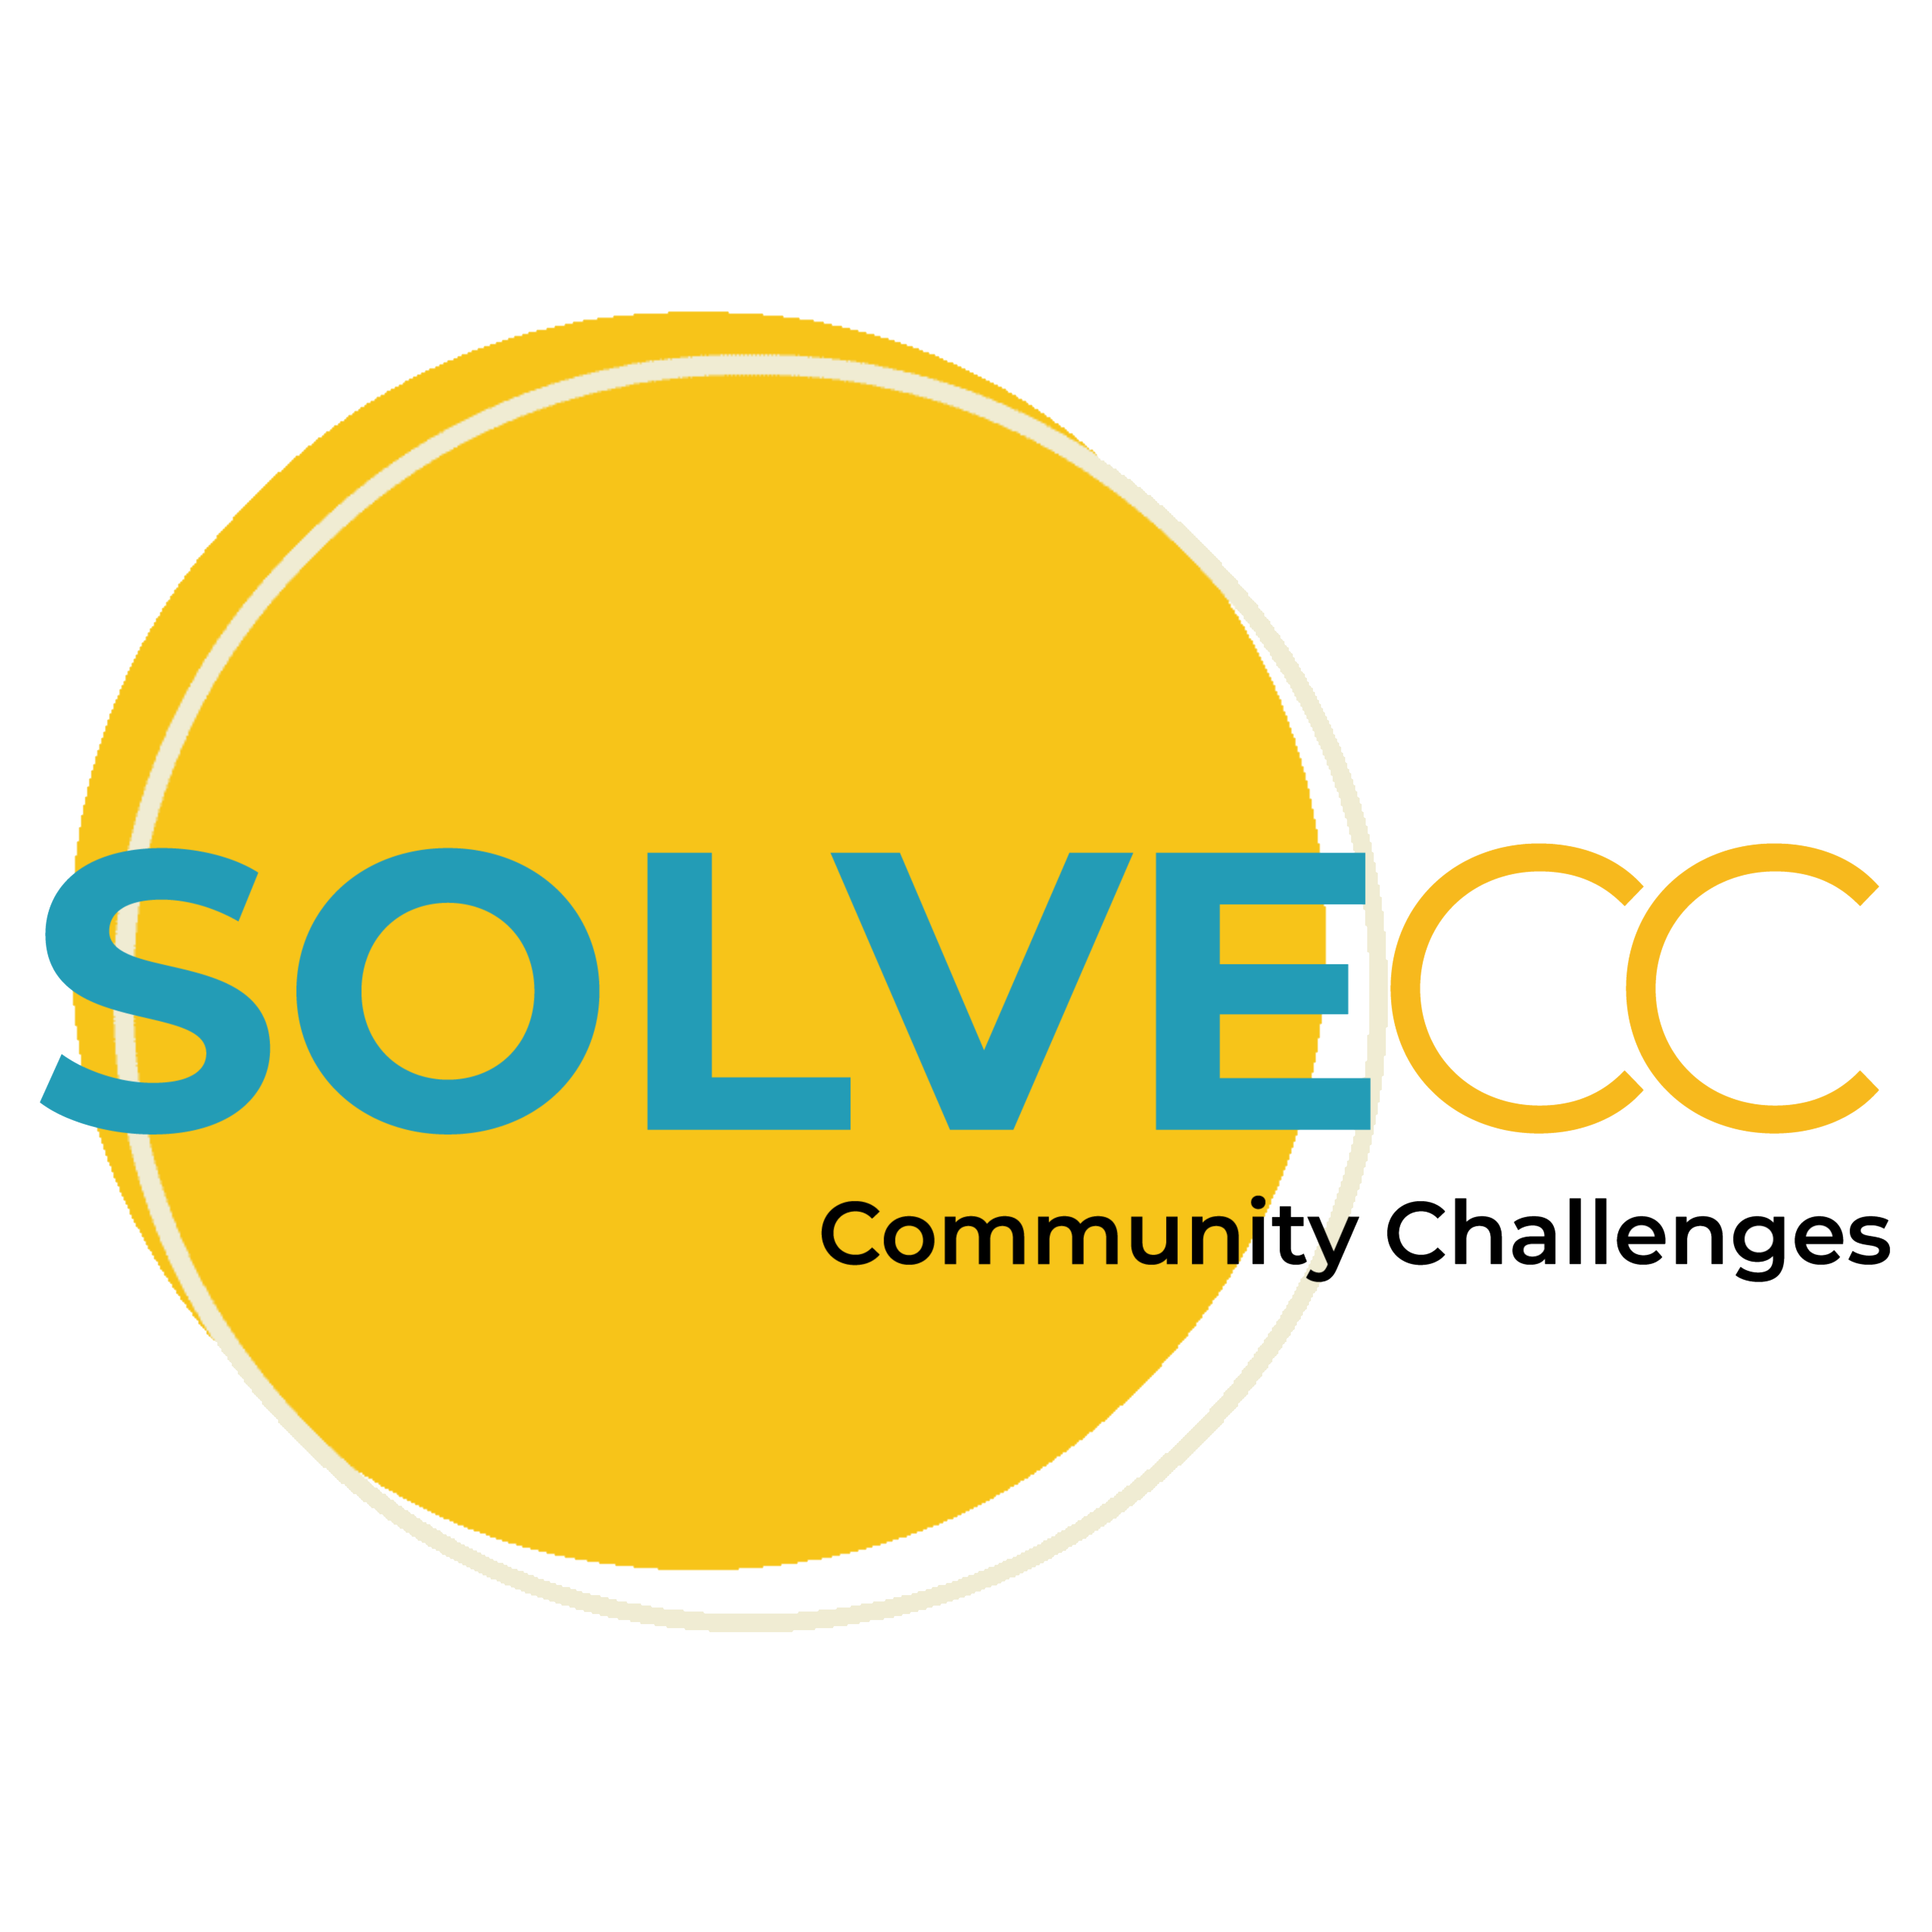 Solve CC Community Challenges - Link to website